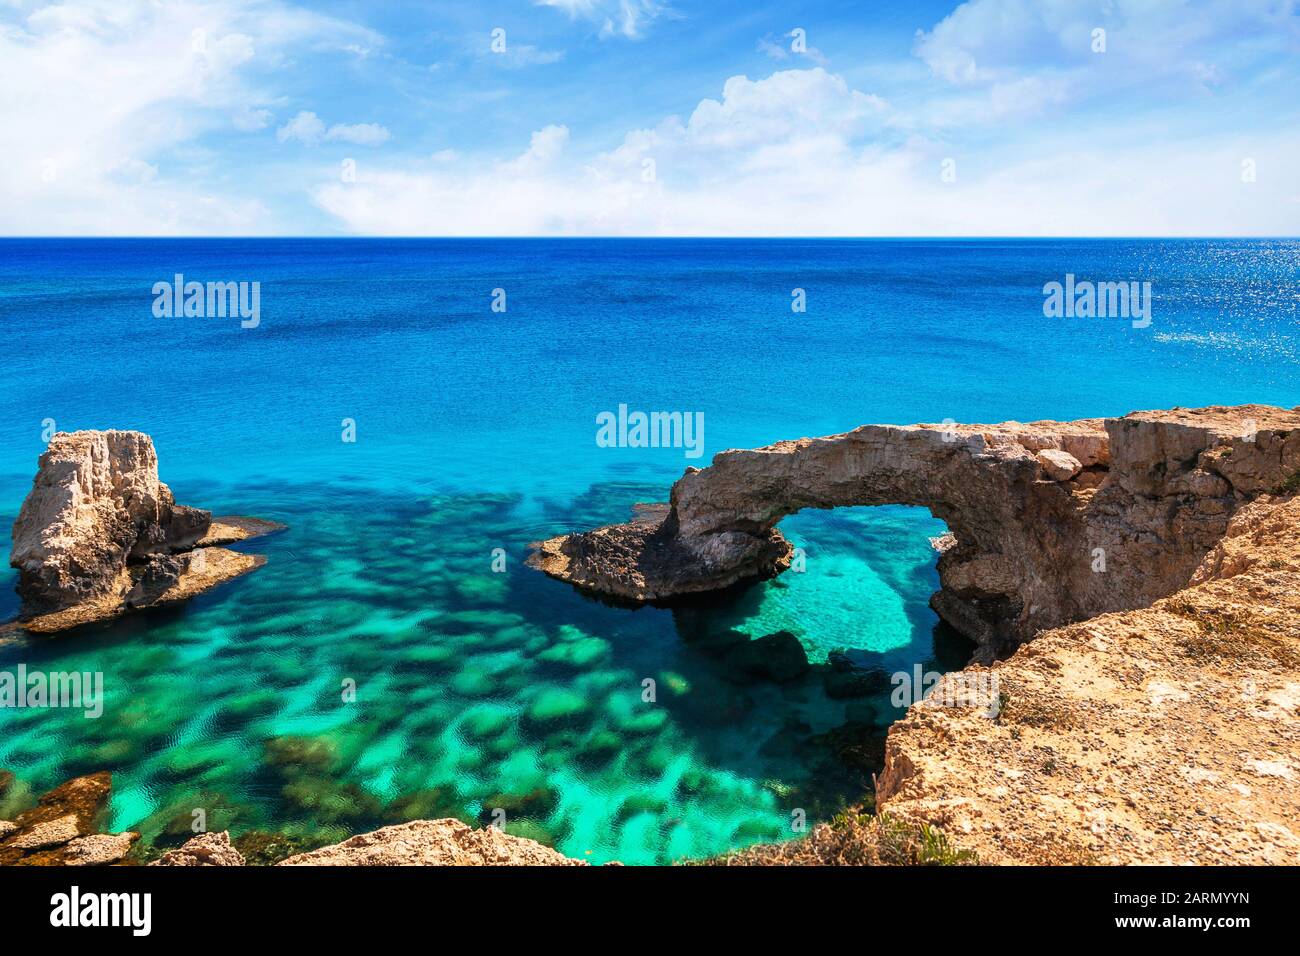 Zyperninsel, Mittelmeer. Legendäre Brückenliebhaber. Stockfoto